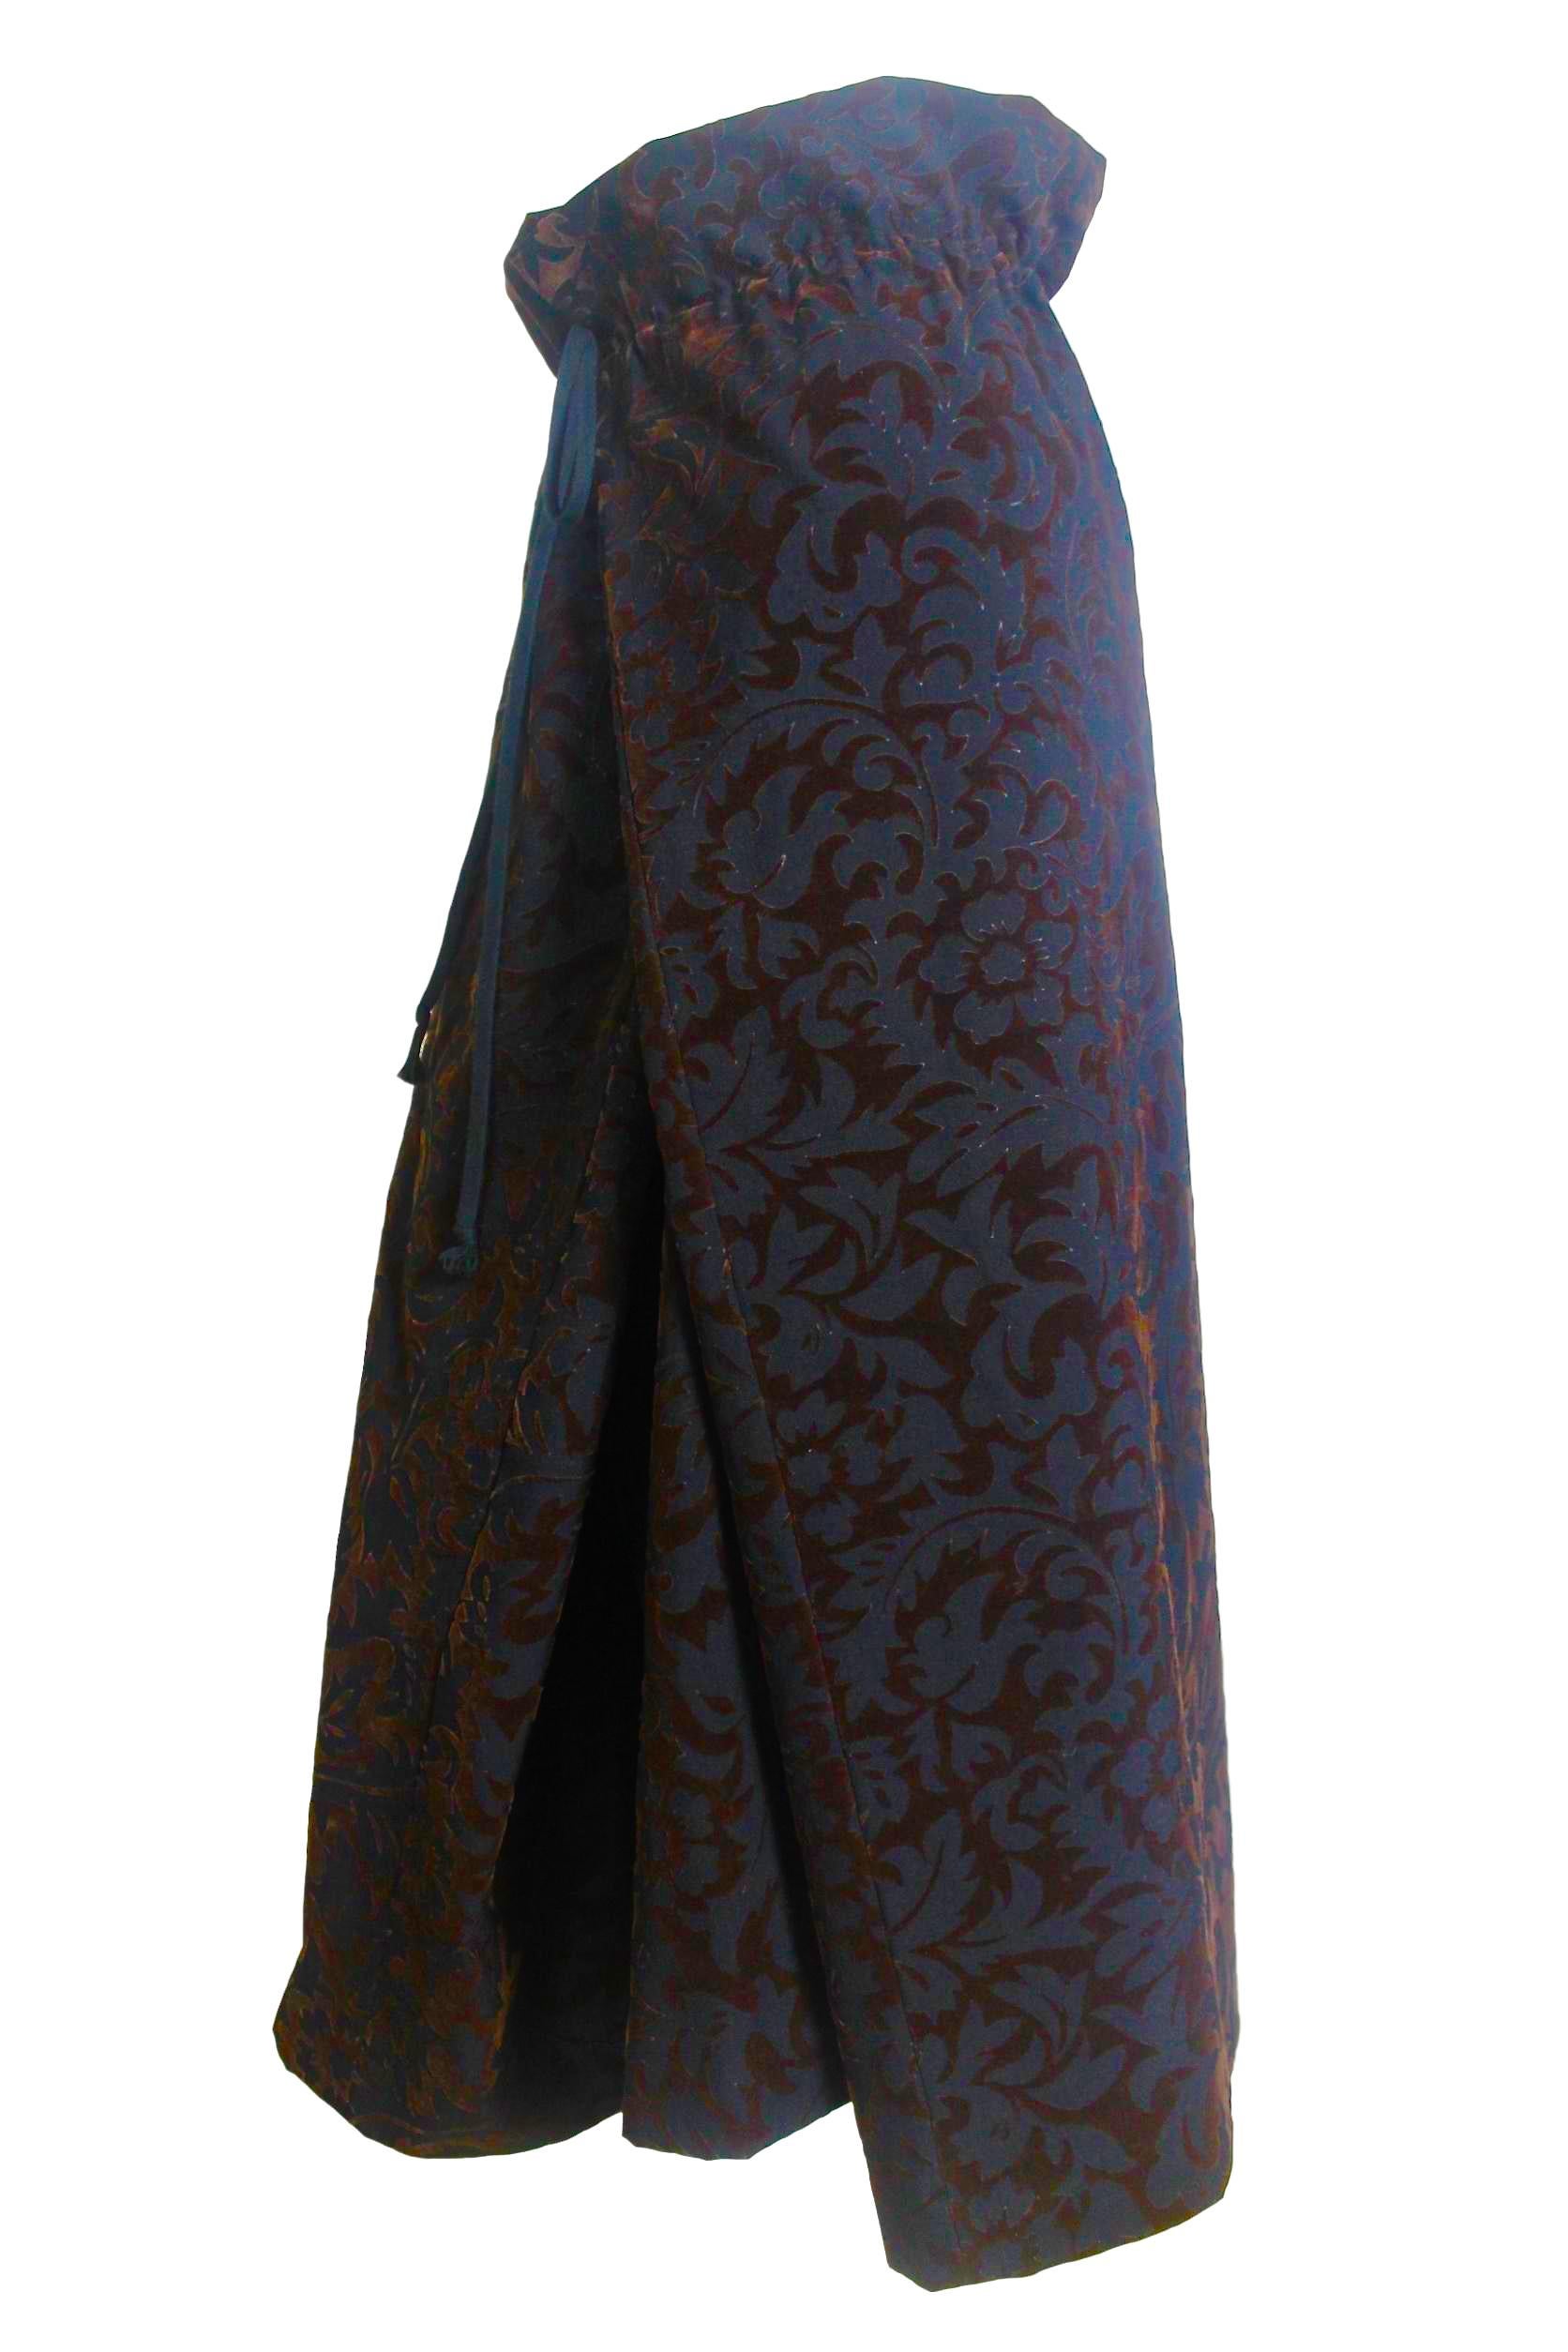 Comme des Garcons Flat Envelope Wool Skirt AD 1996 For Sale 7